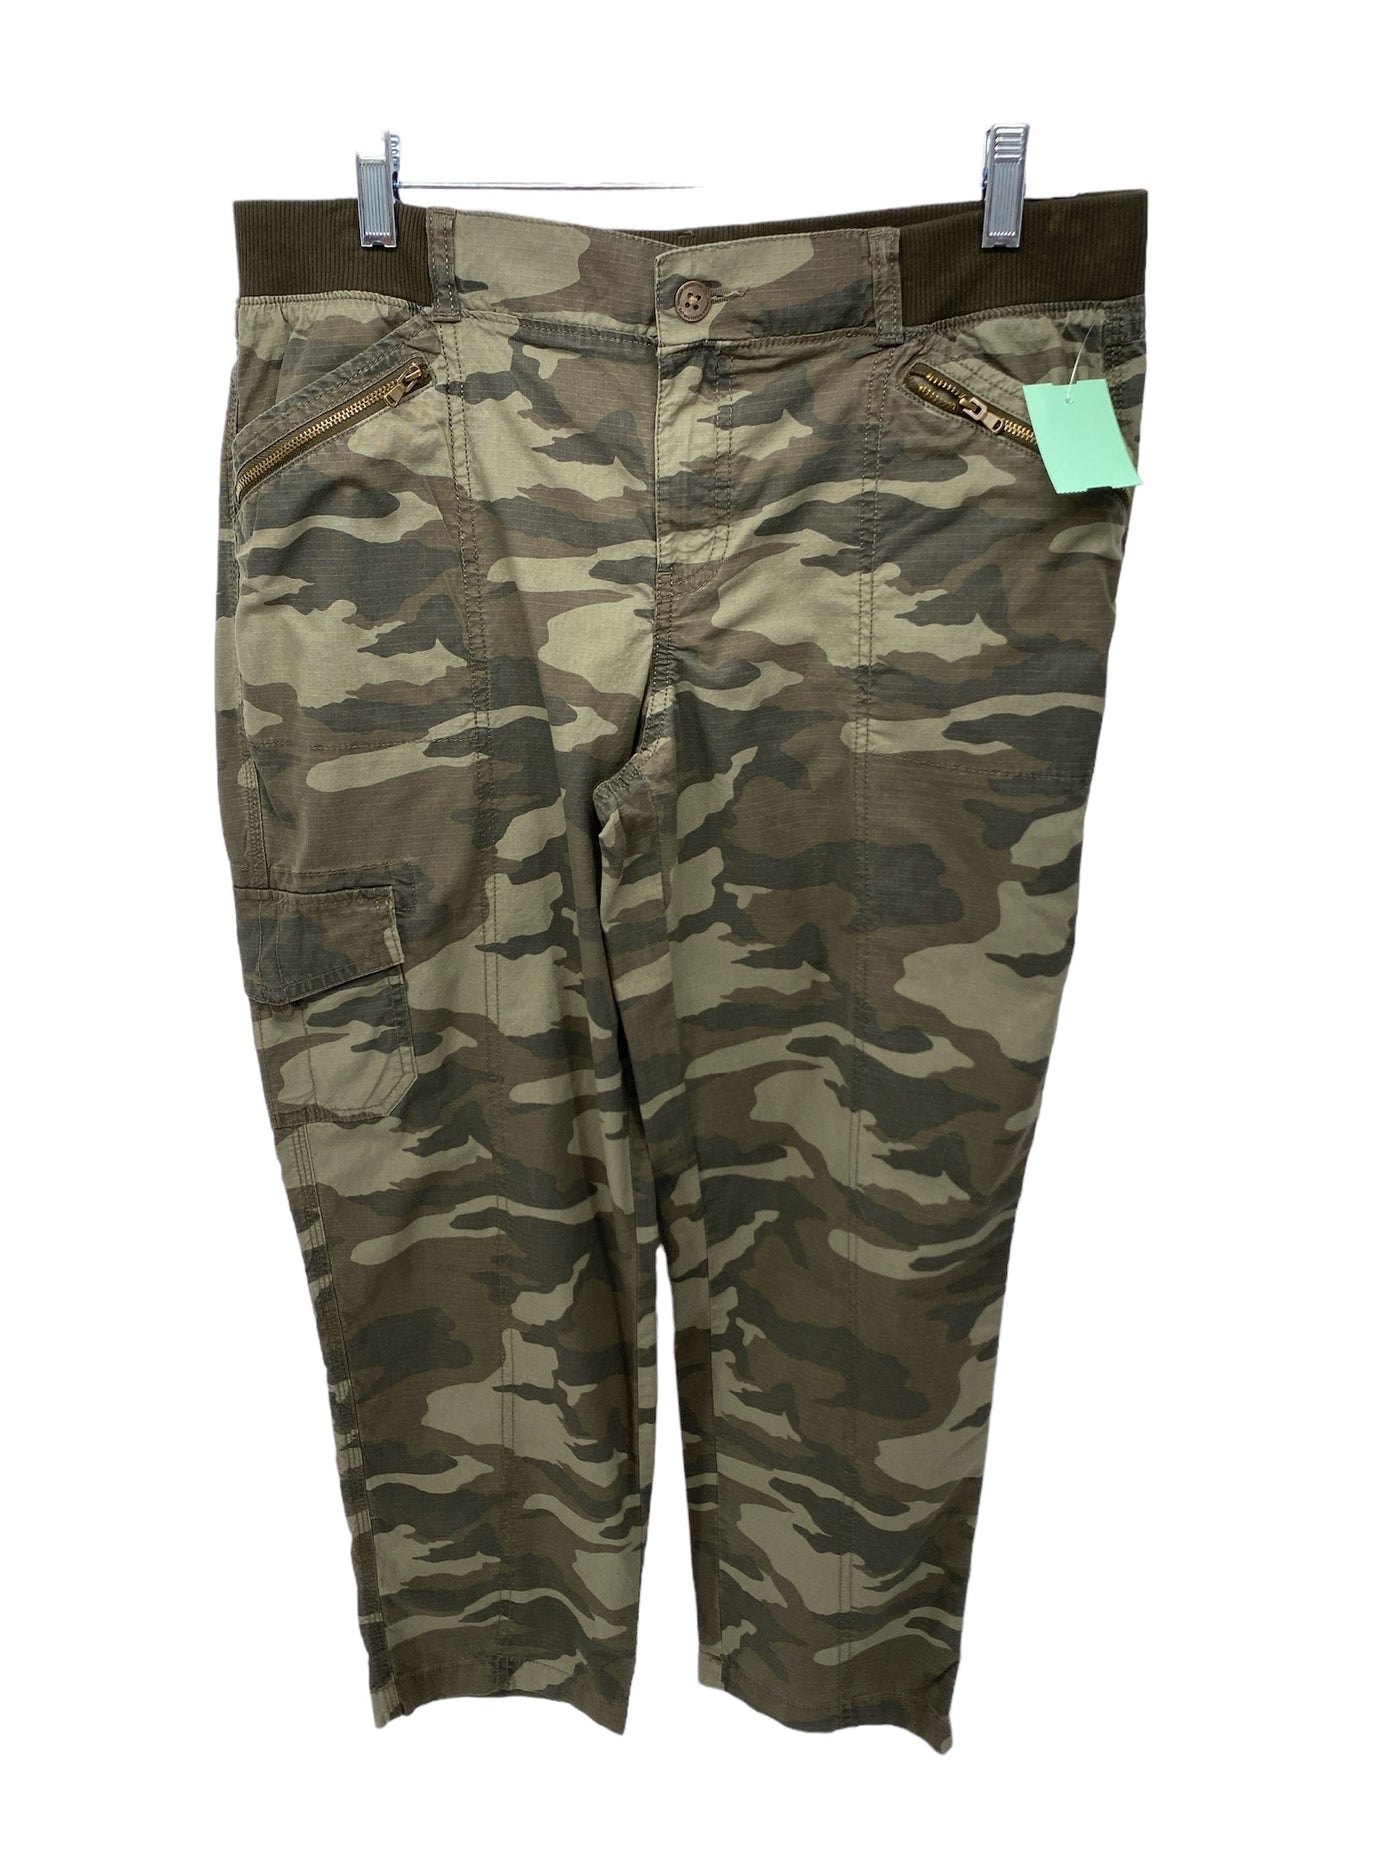 Sonoma Misses Size 12 Camoflage Pants